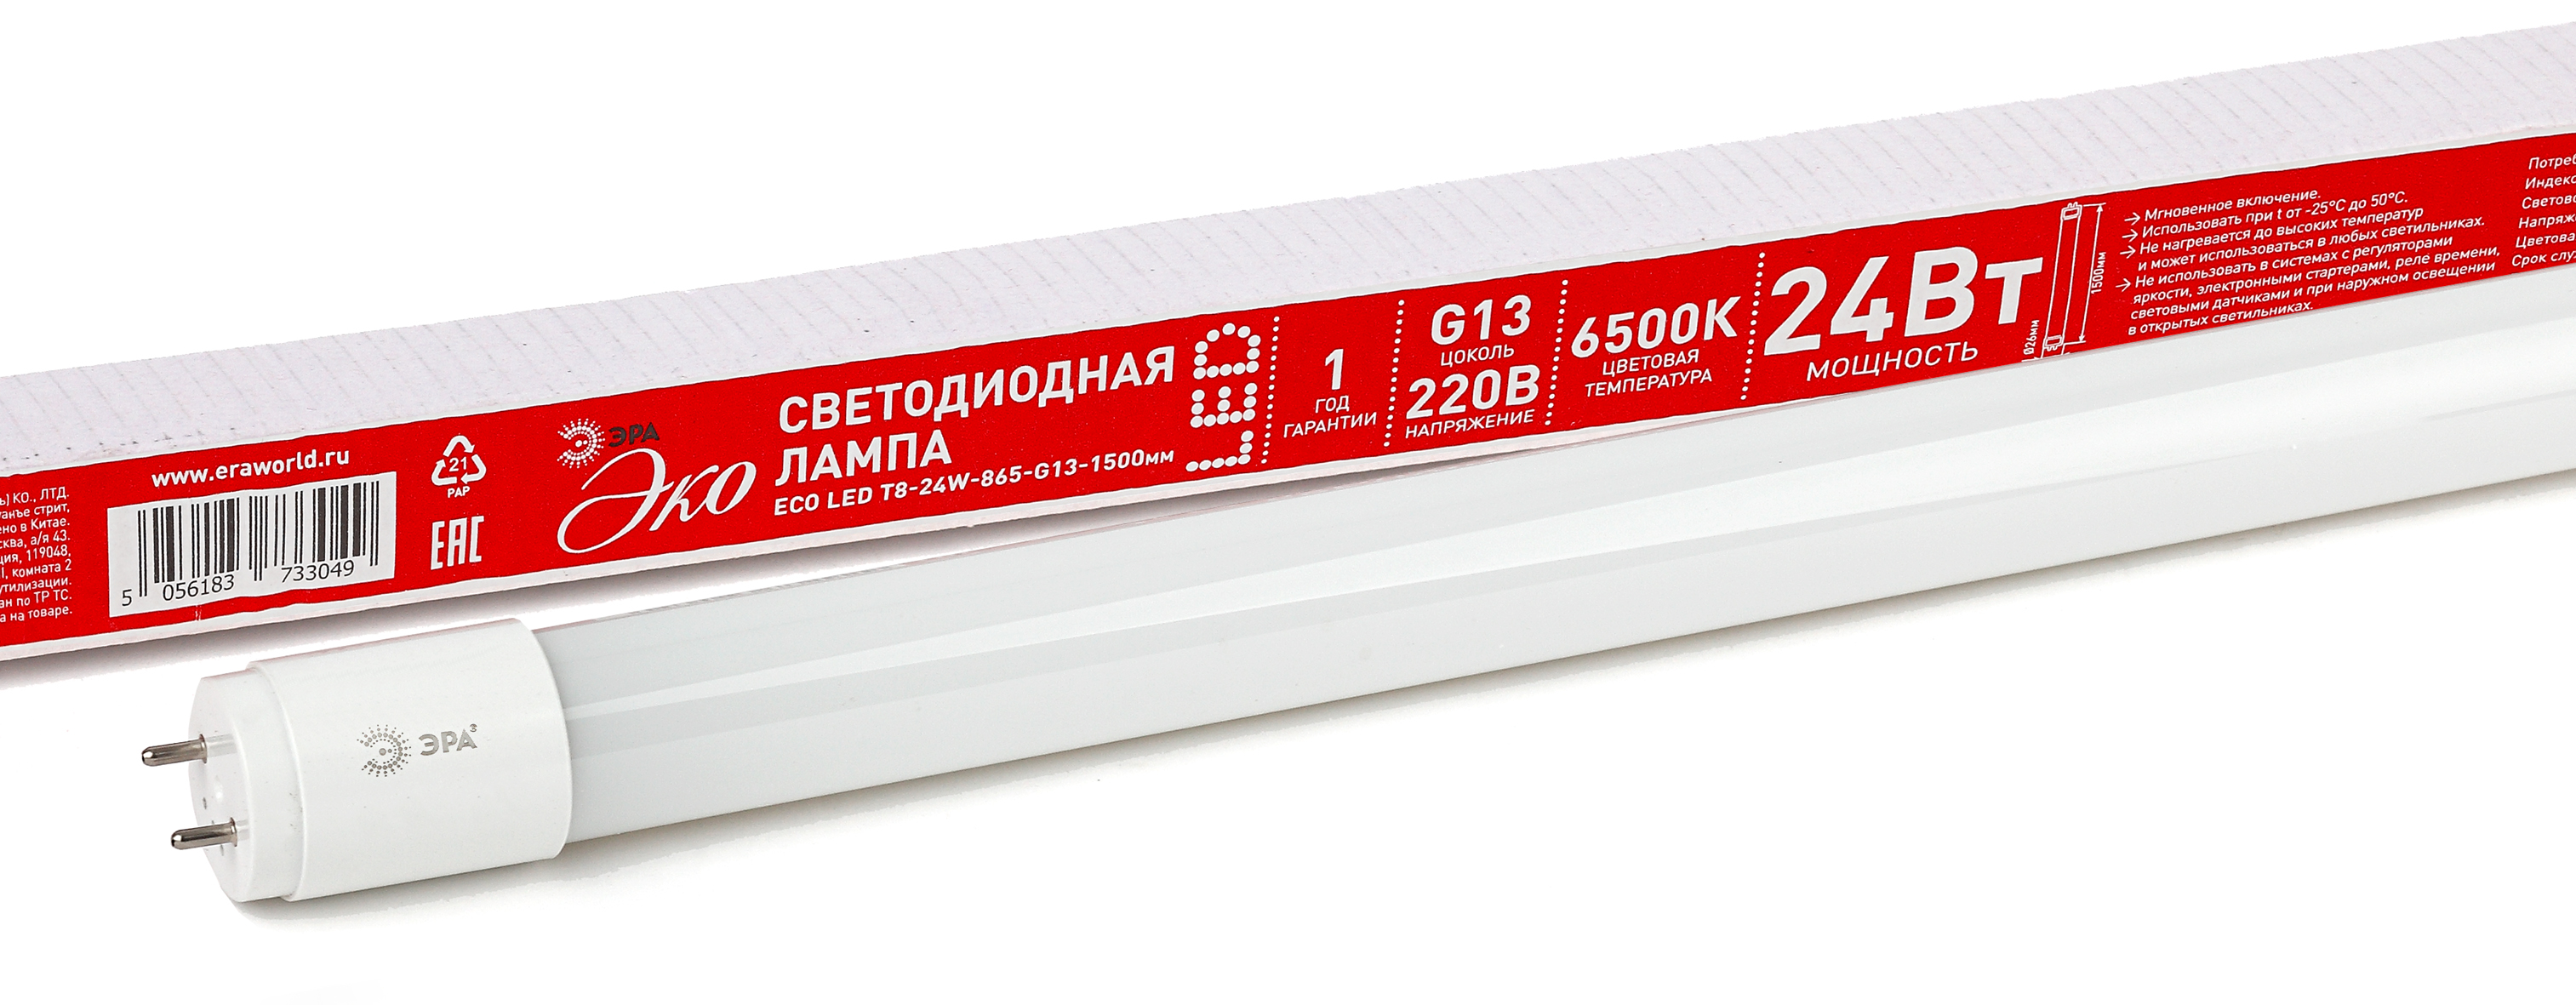 ECO LED T8-24W-865-G13-1500mm ЭРА (диод,трубка стекл,24Вт,хол,непов. G13) (30/840)